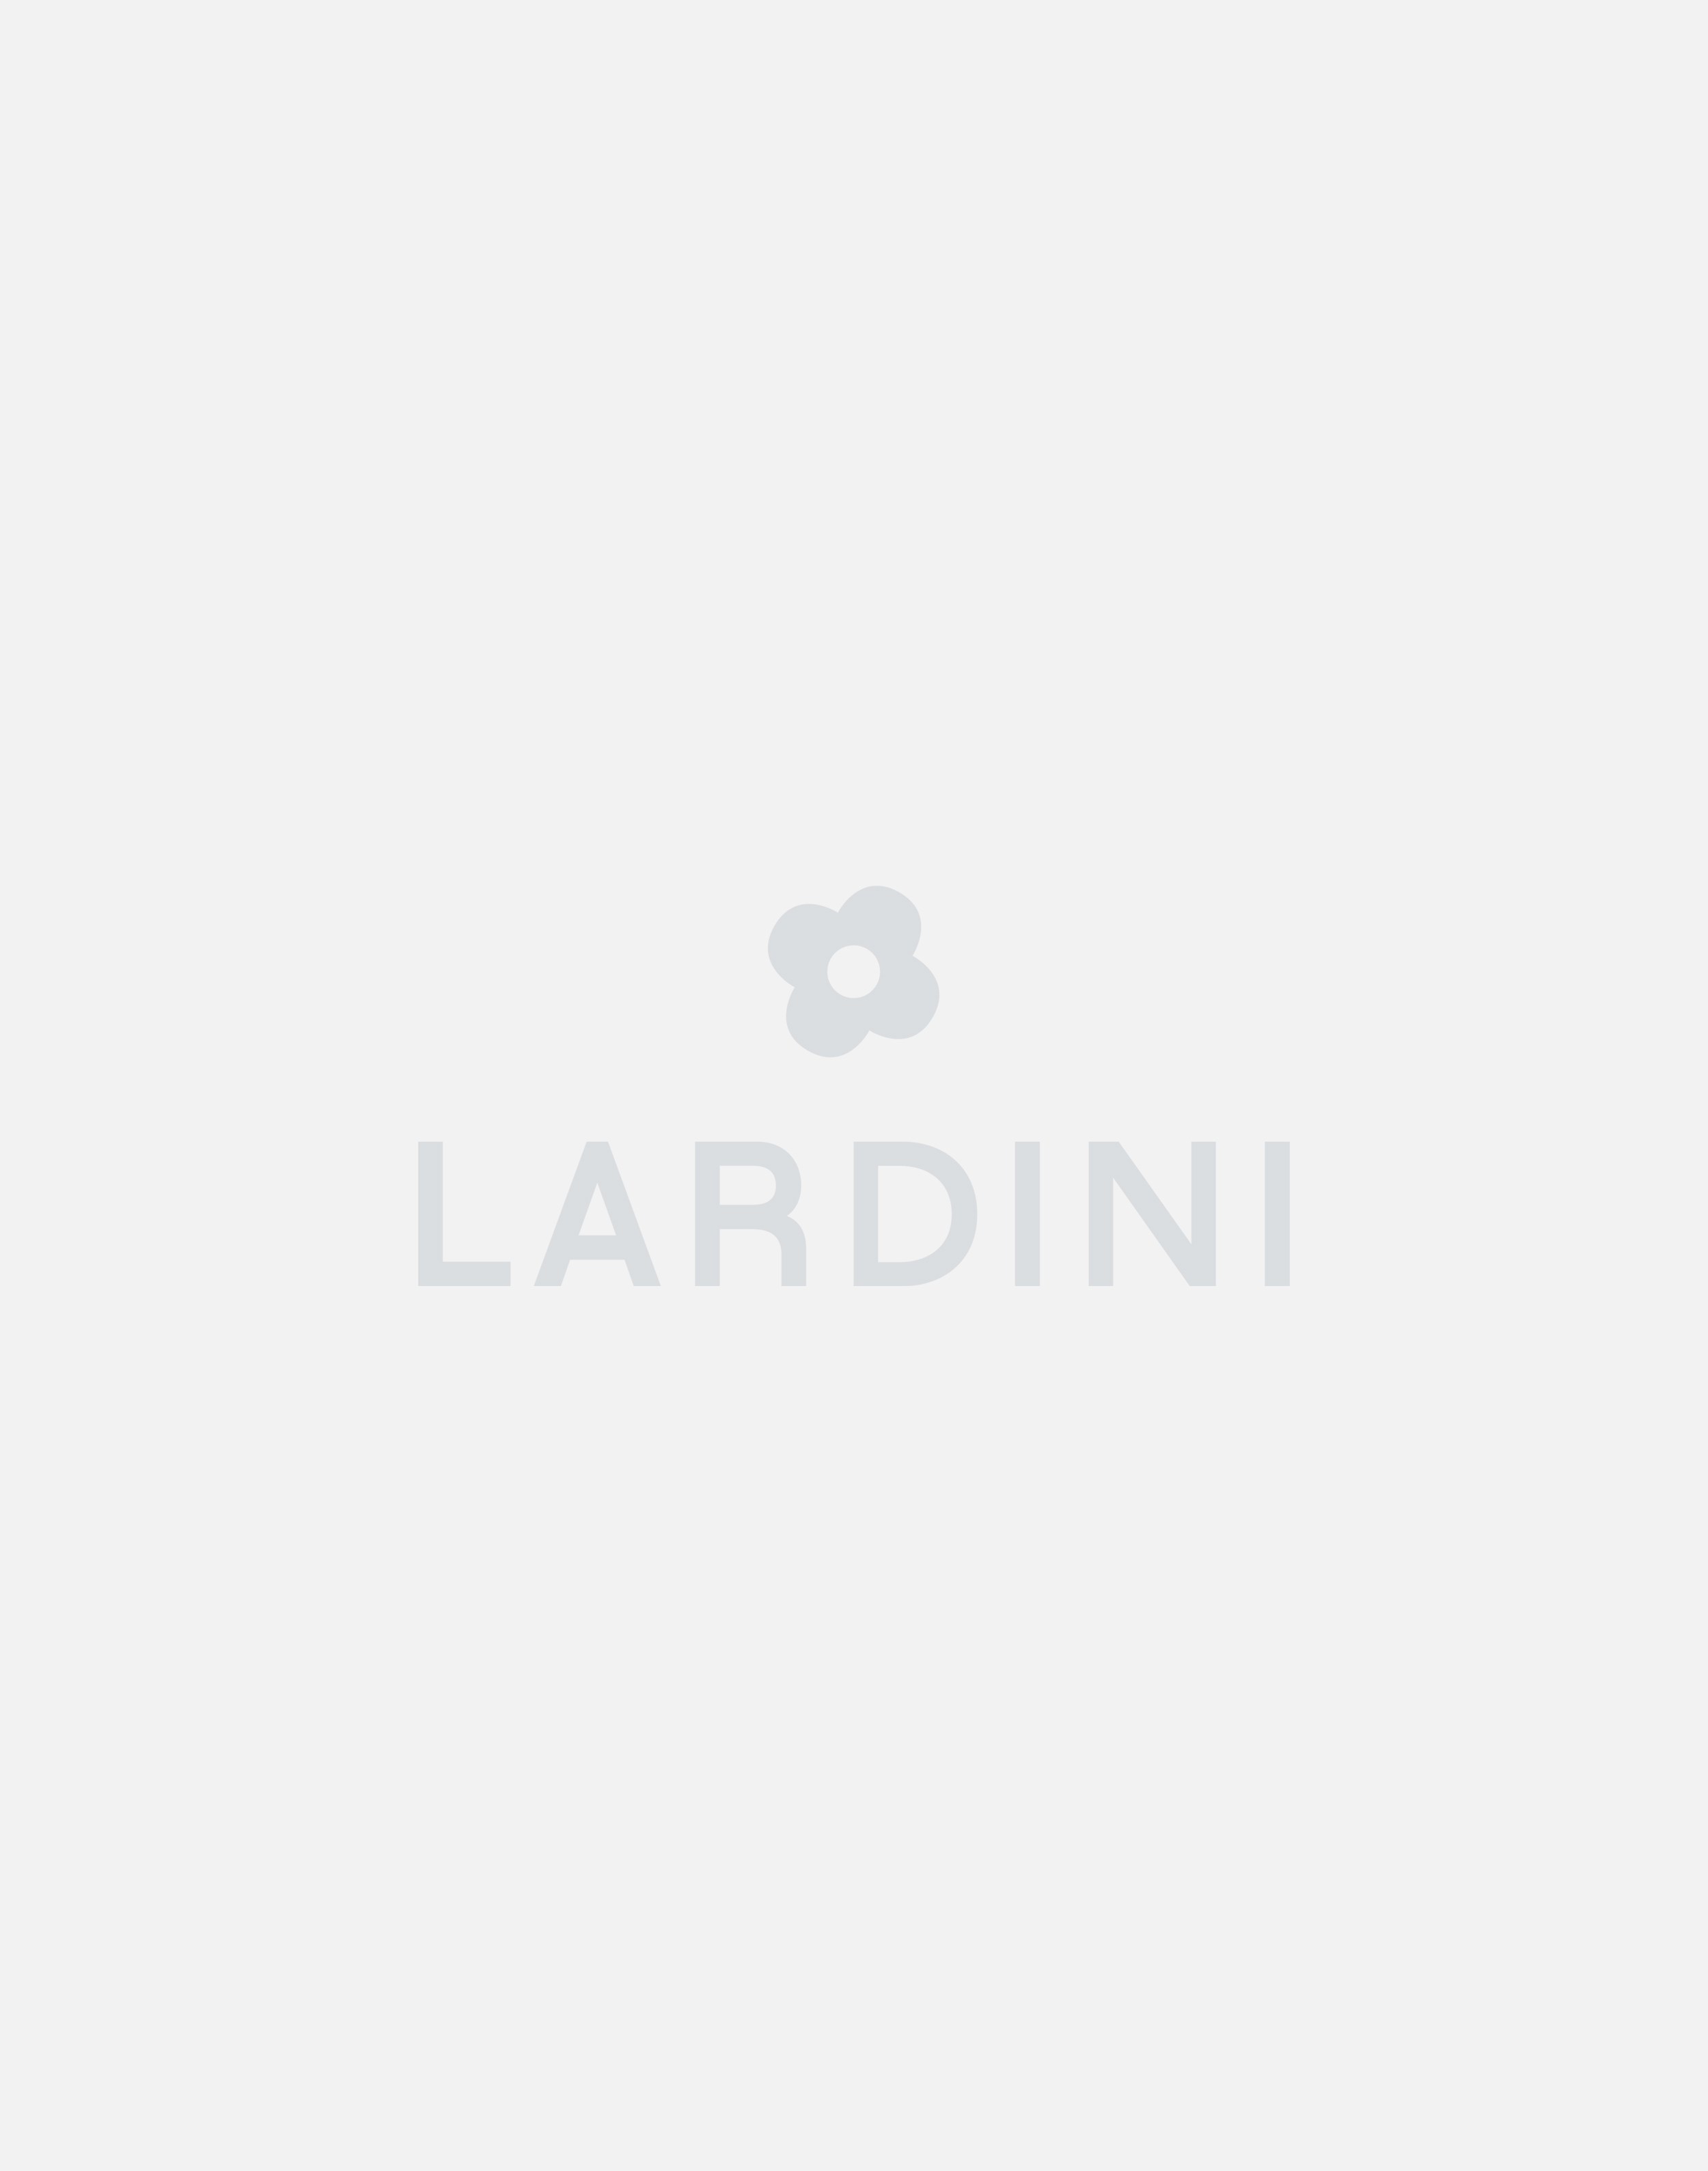 White compact cotton polo shirt - Luigi Lardini capsule 2